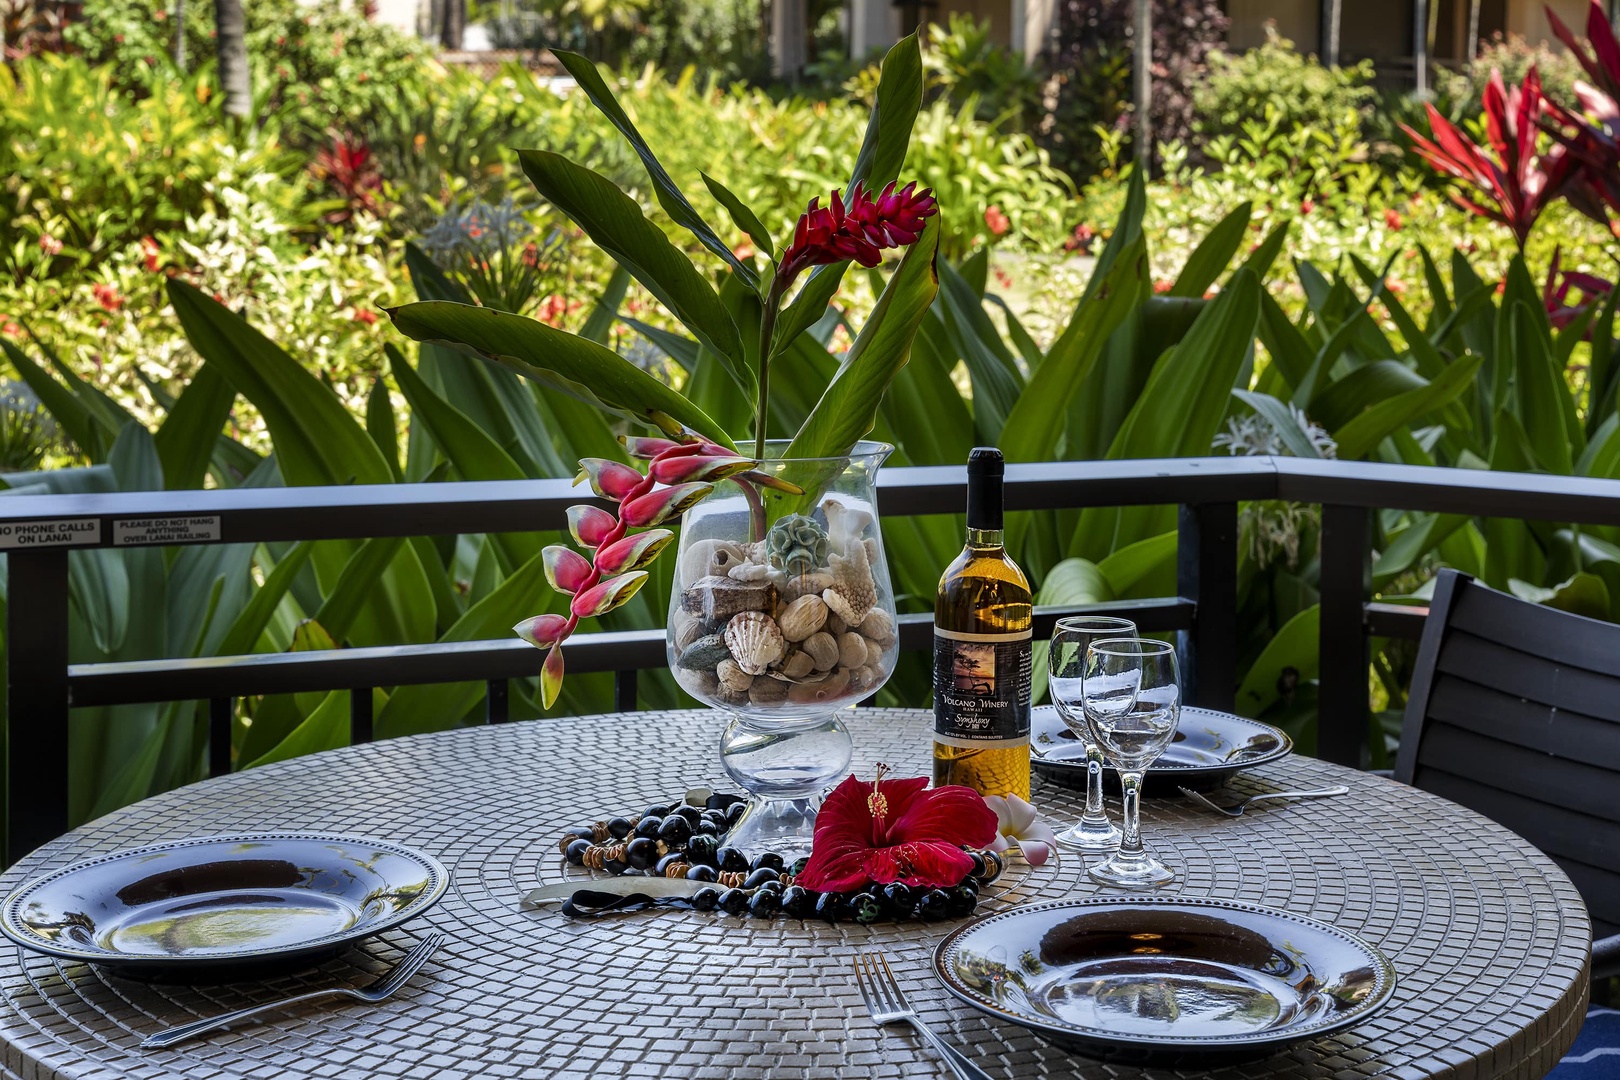 Kailua Kona Vacation Rentals, Kona Makai 2103 - Enjoy your prepared meals on the outdoor dining set!~